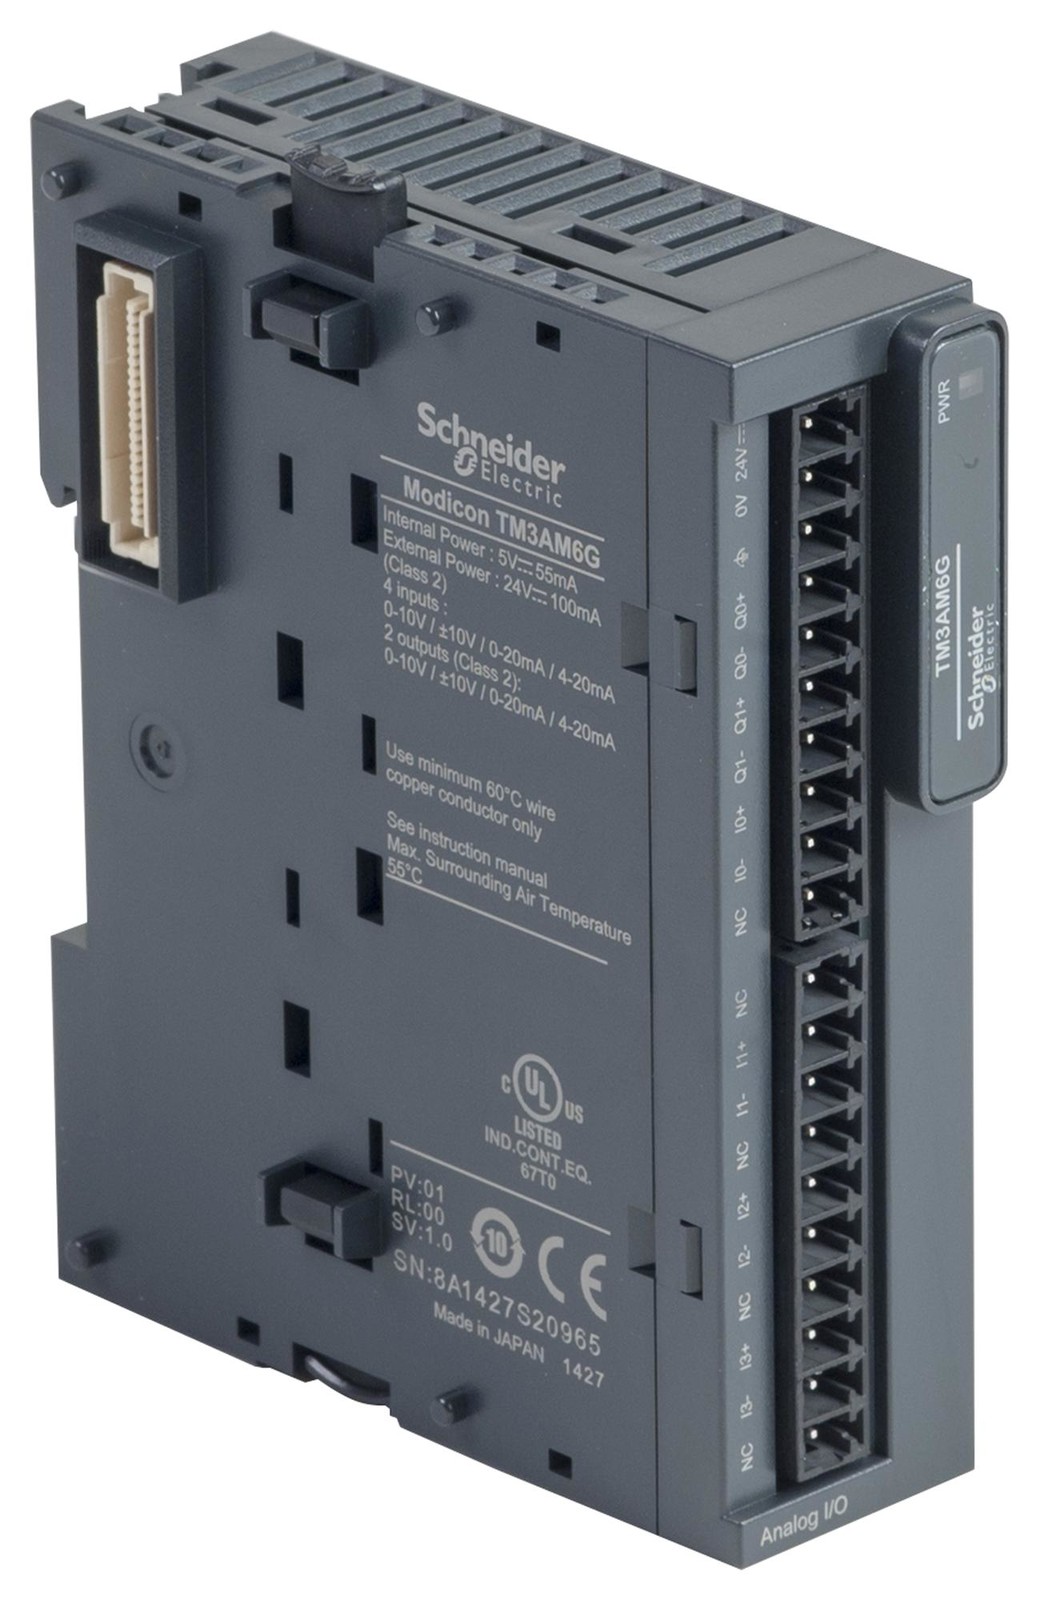 Schneider Electric Tm3Am6G Module, 4 Analog Input/2 Analog Output